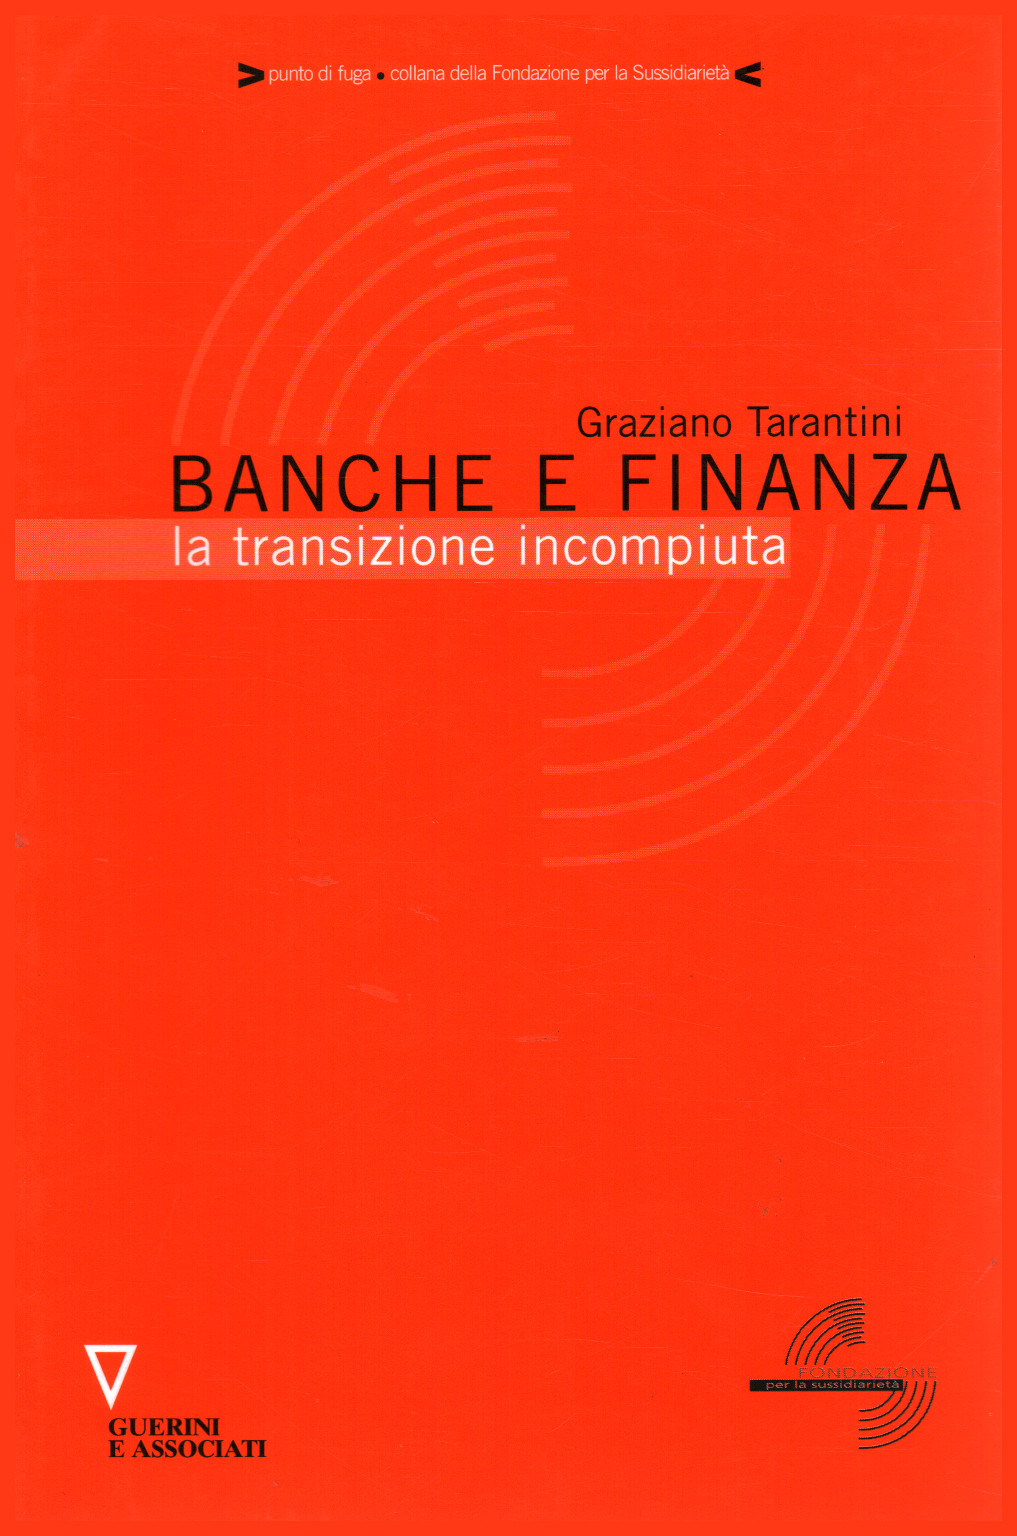 The banking and finance, Graziano Tarantini